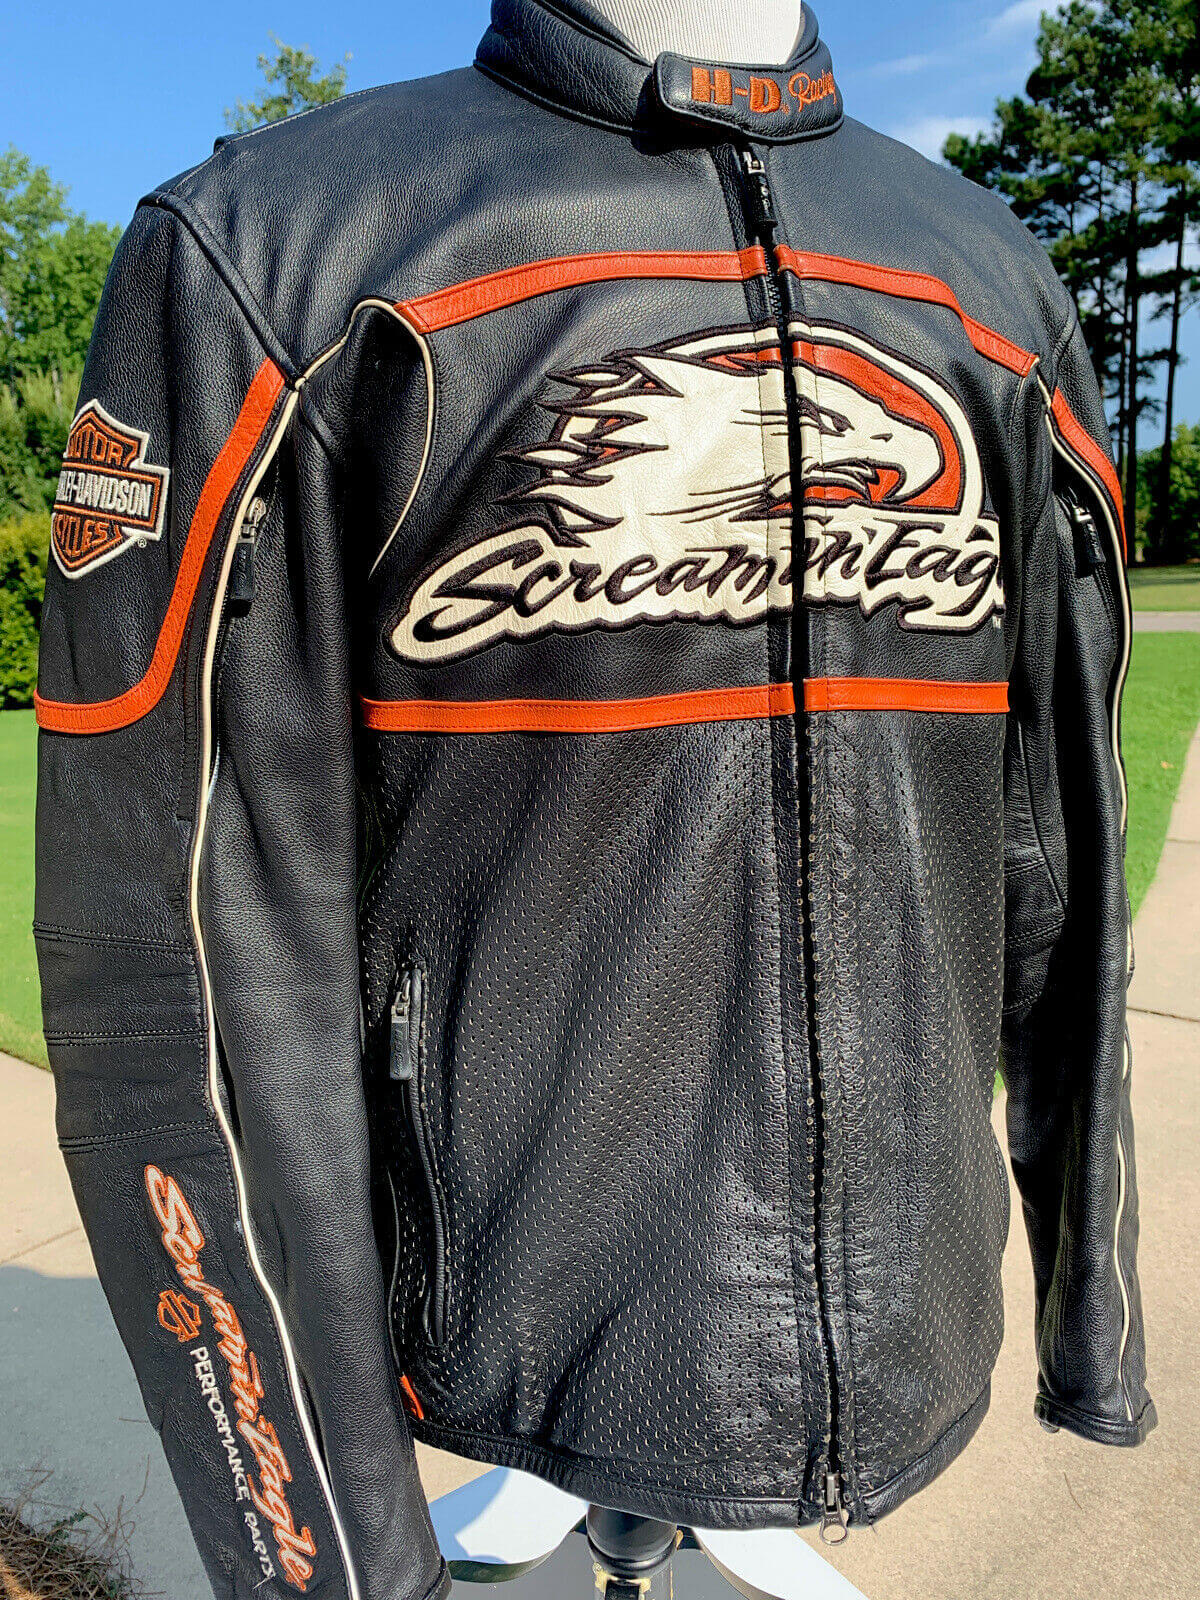 Harley Davidson Raceway Screamin Eagle Leather Jacket - Maker of